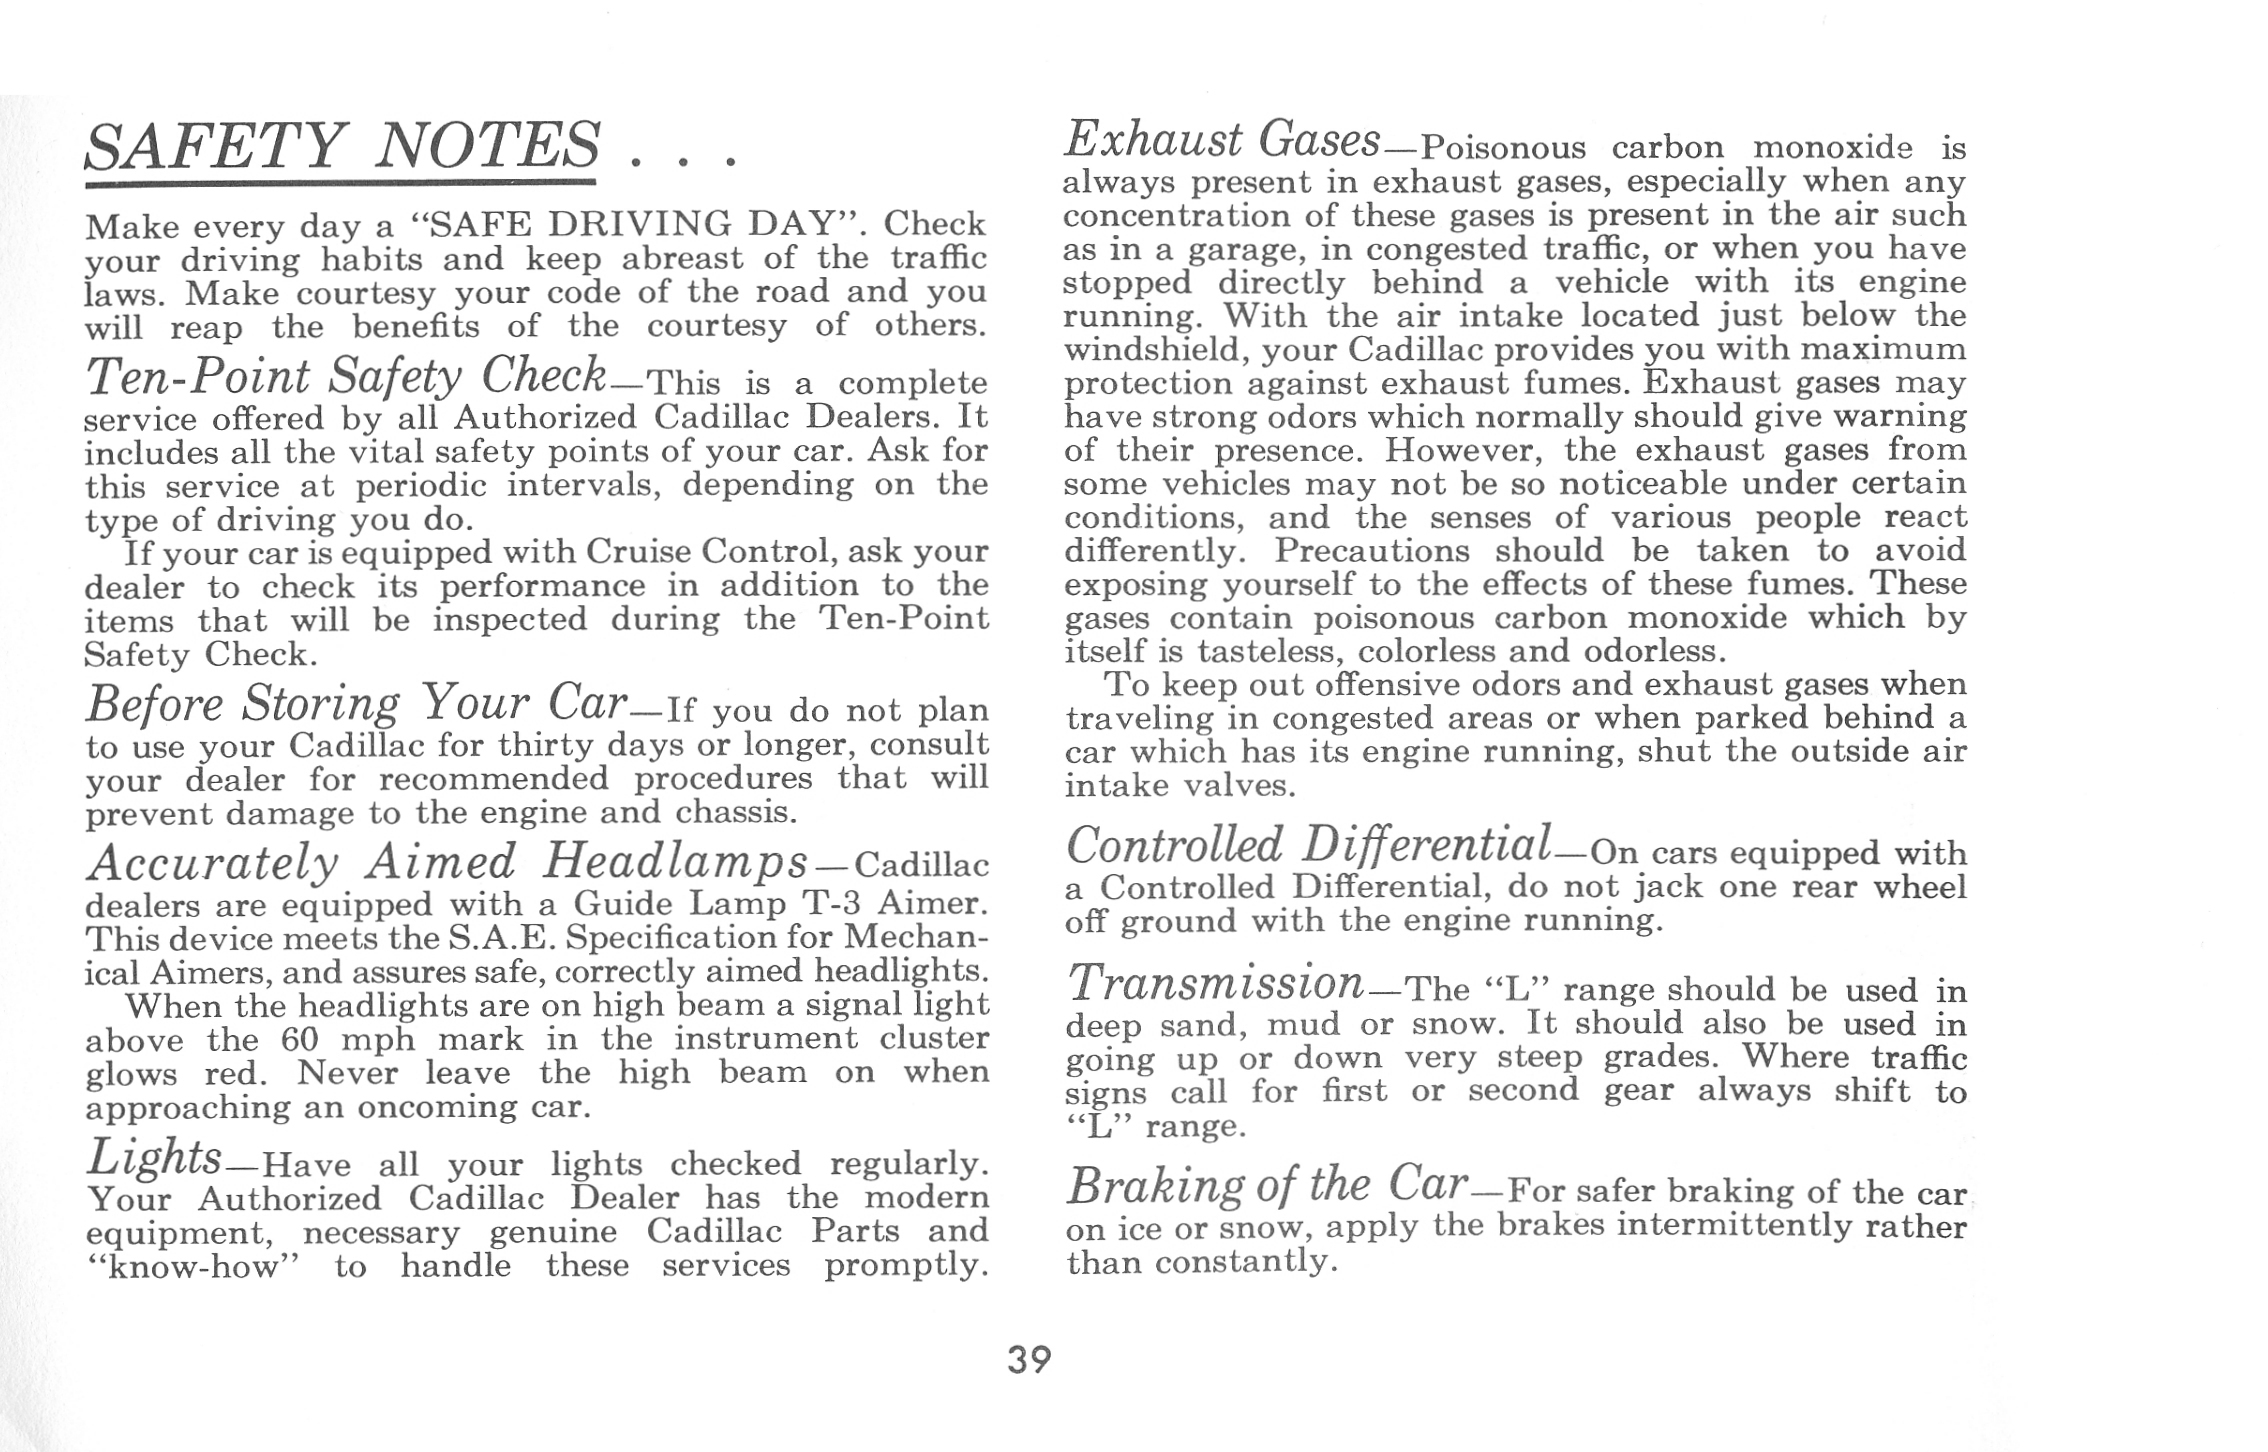 n_1962 Cadillac Owner's Manual-Page 39.jpg